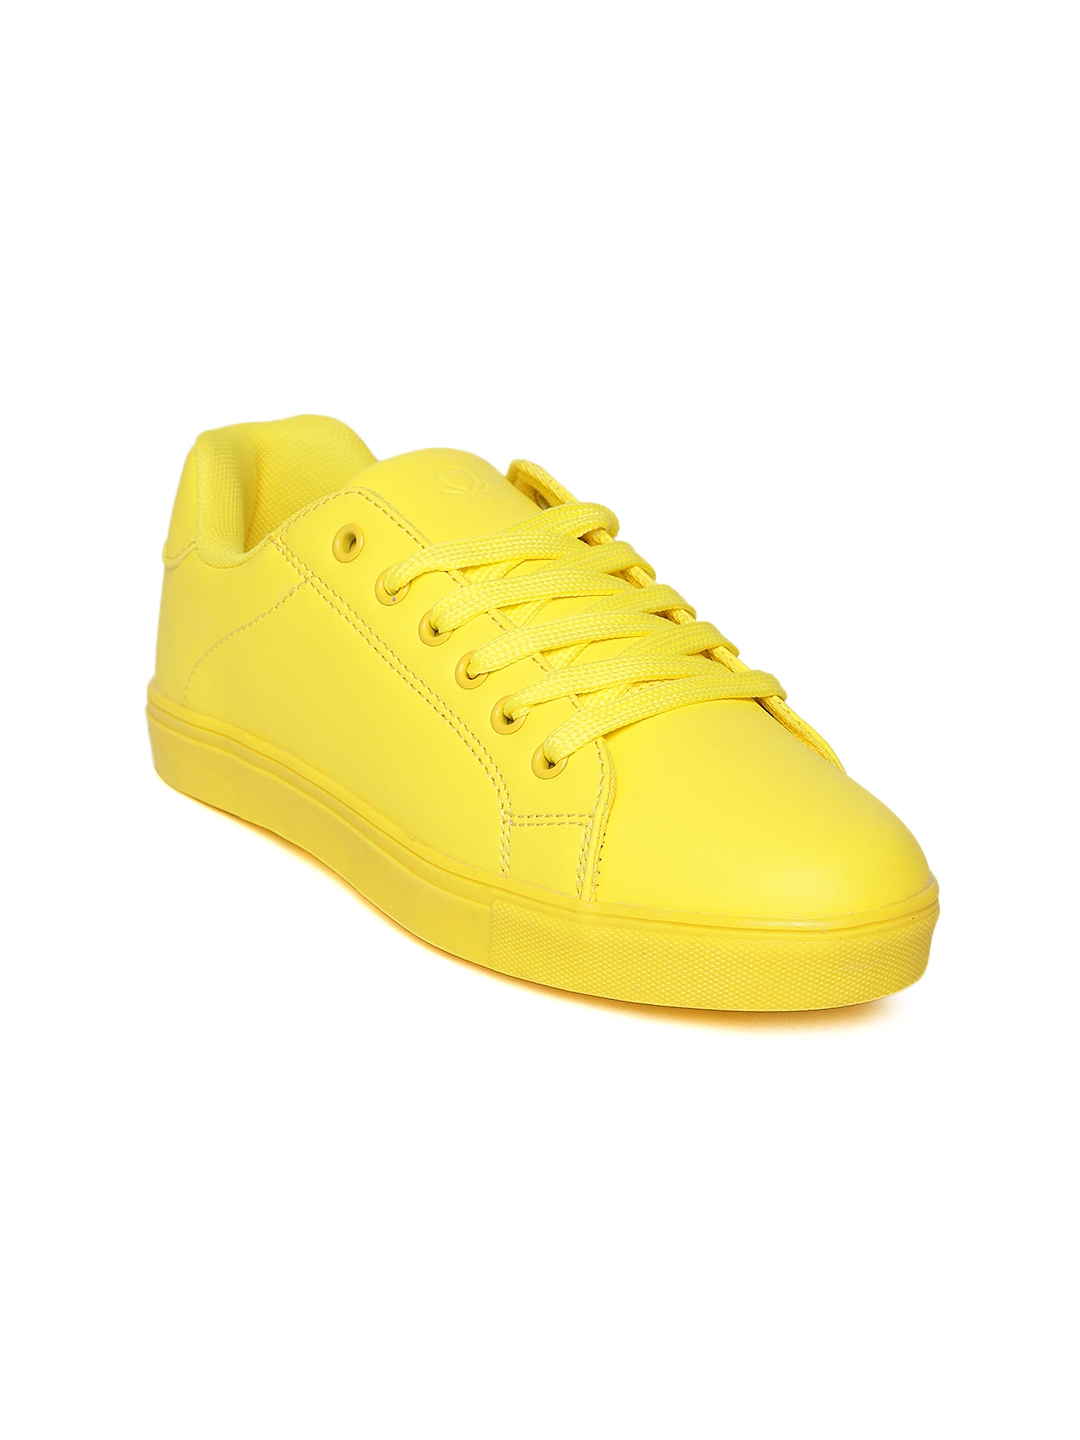 yellow sneakers women